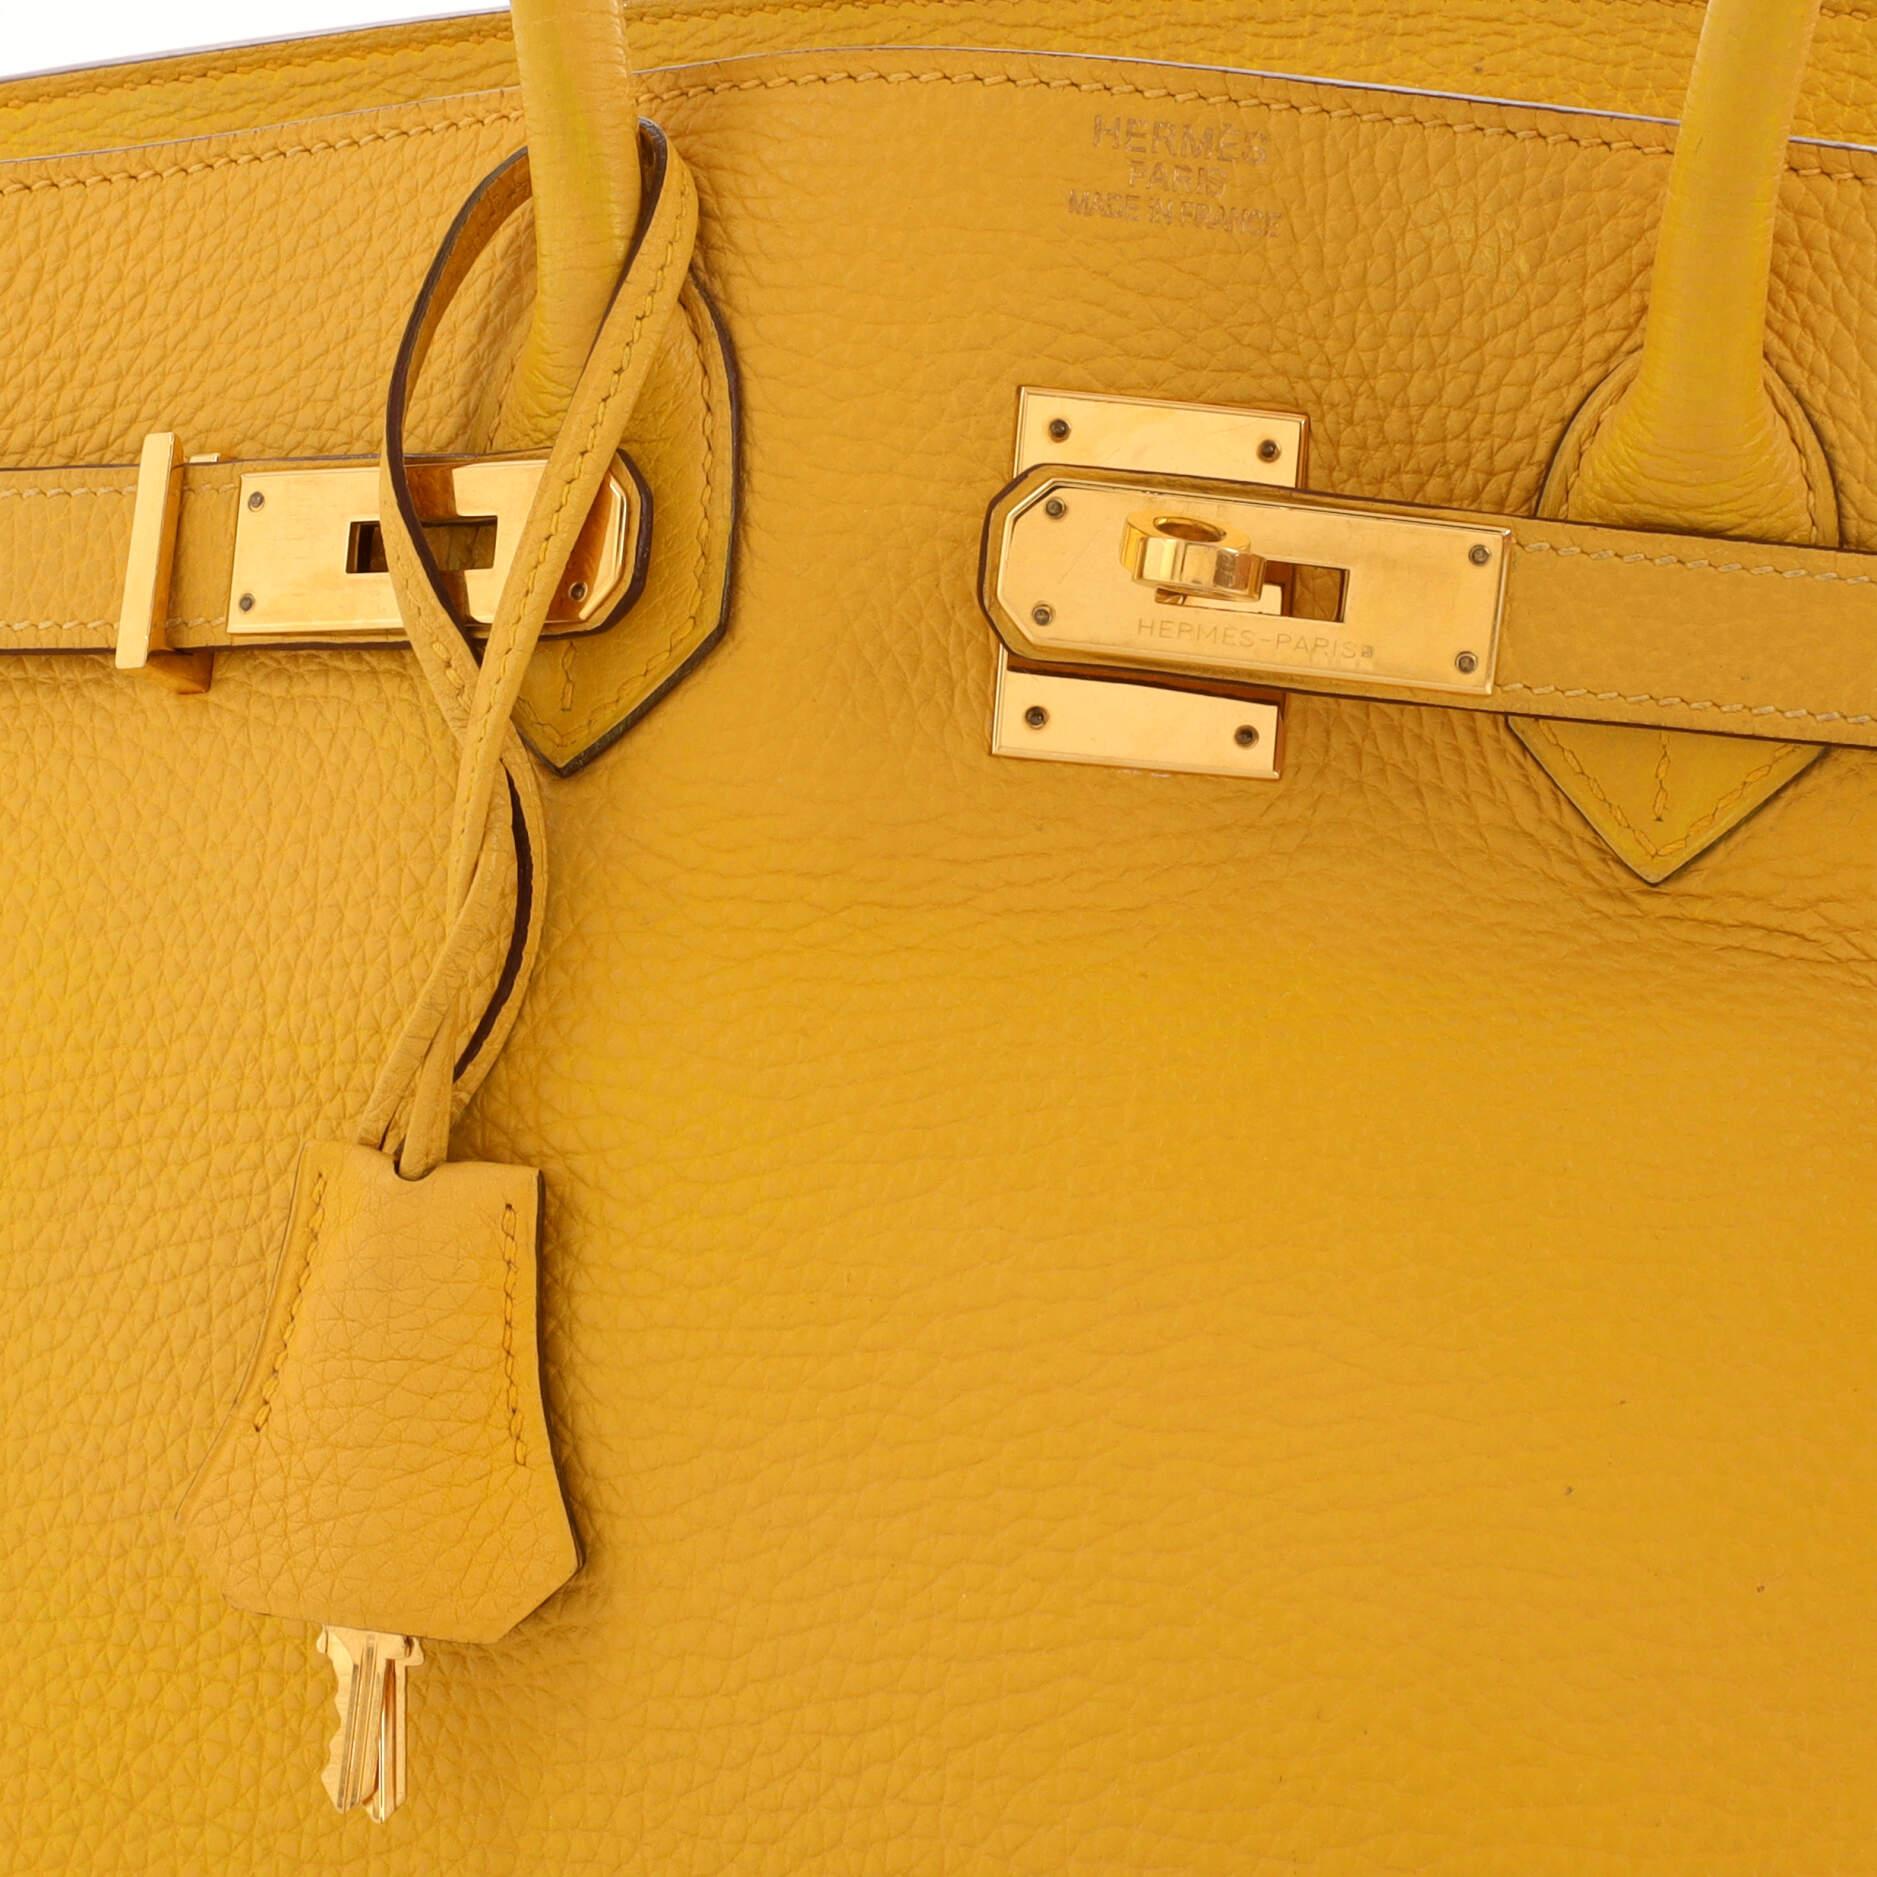 Hermes Birkin Handbag Soleil Togo With Gold Hardware 35 2